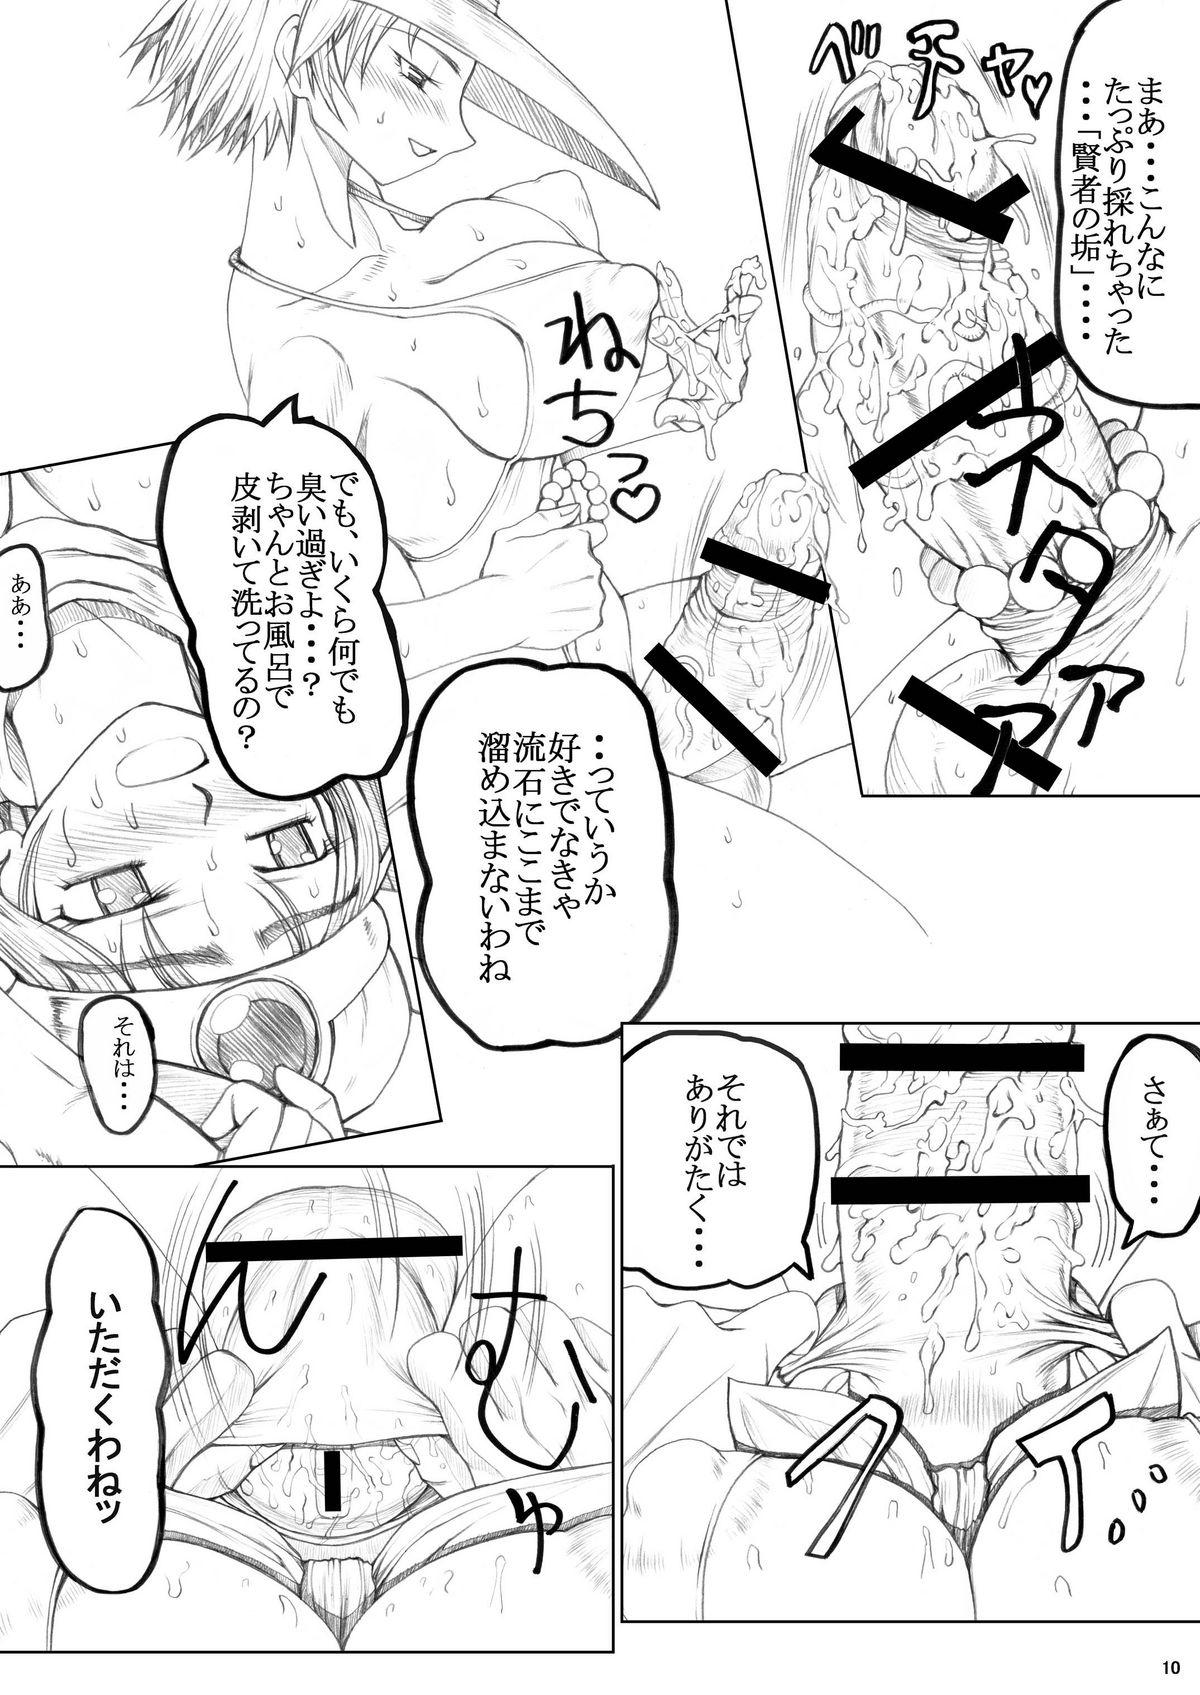 Jeune Mec Eikyuushi - Dragon quest iii Piss - Page 10